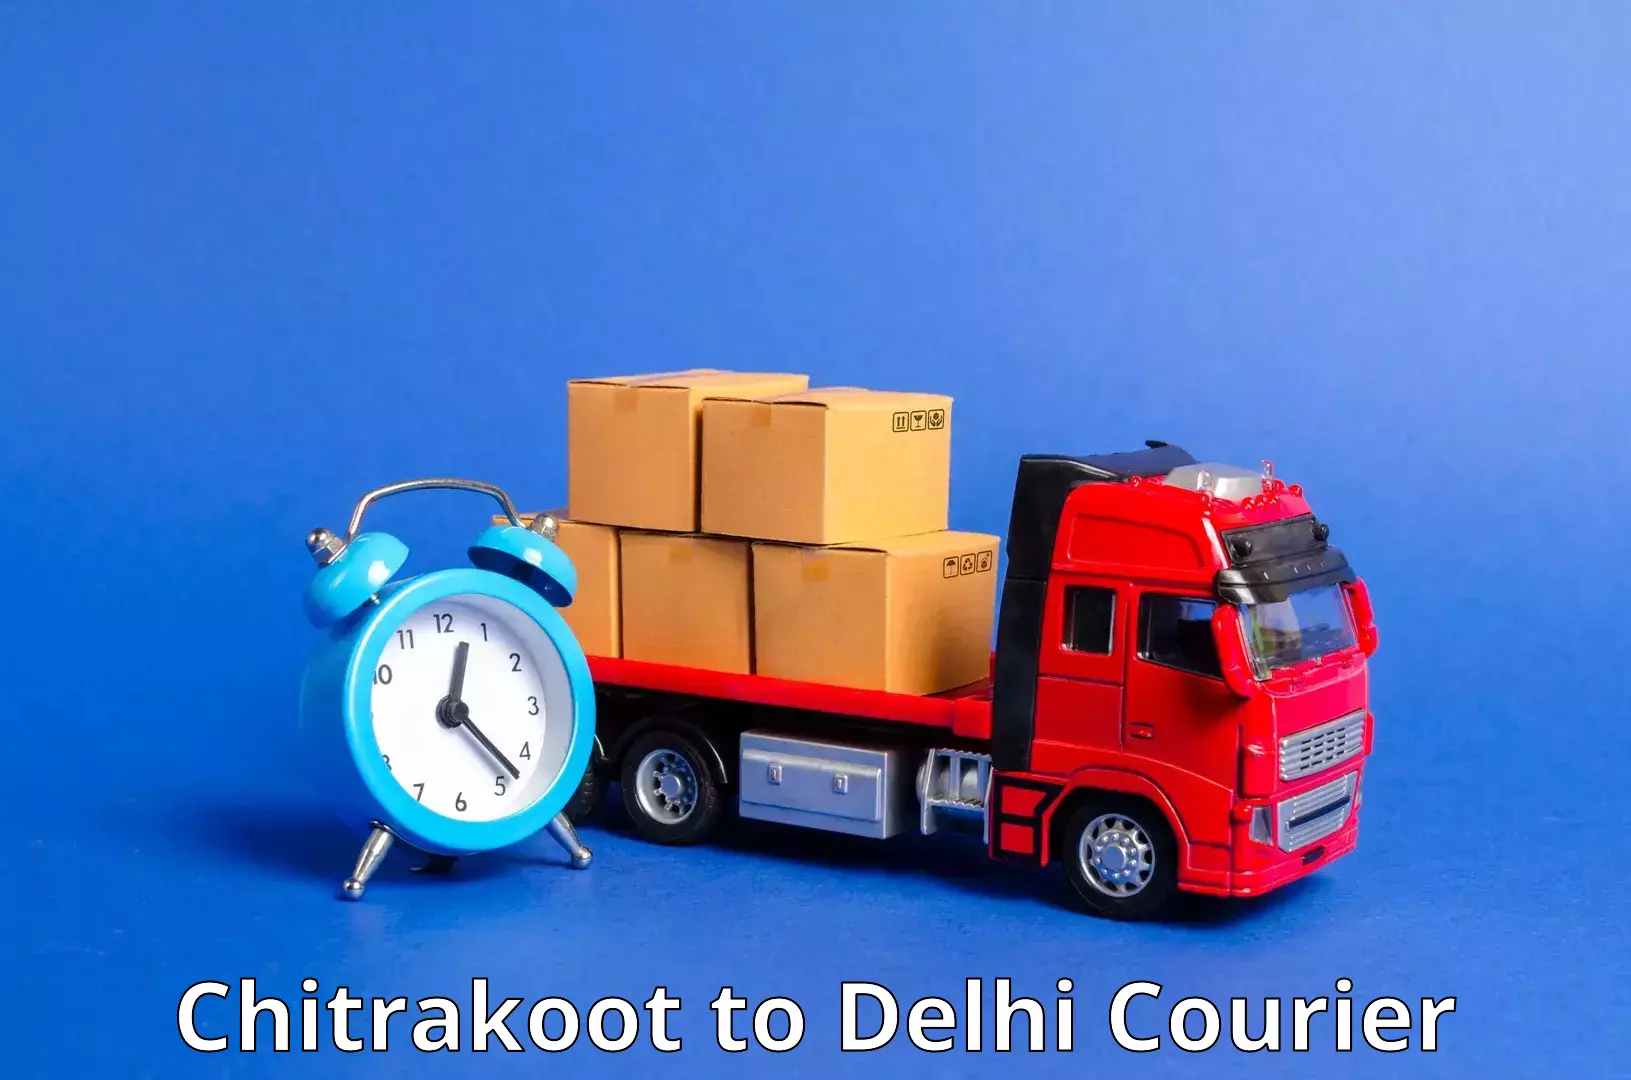 Courier service innovation Chitrakoot to Delhi